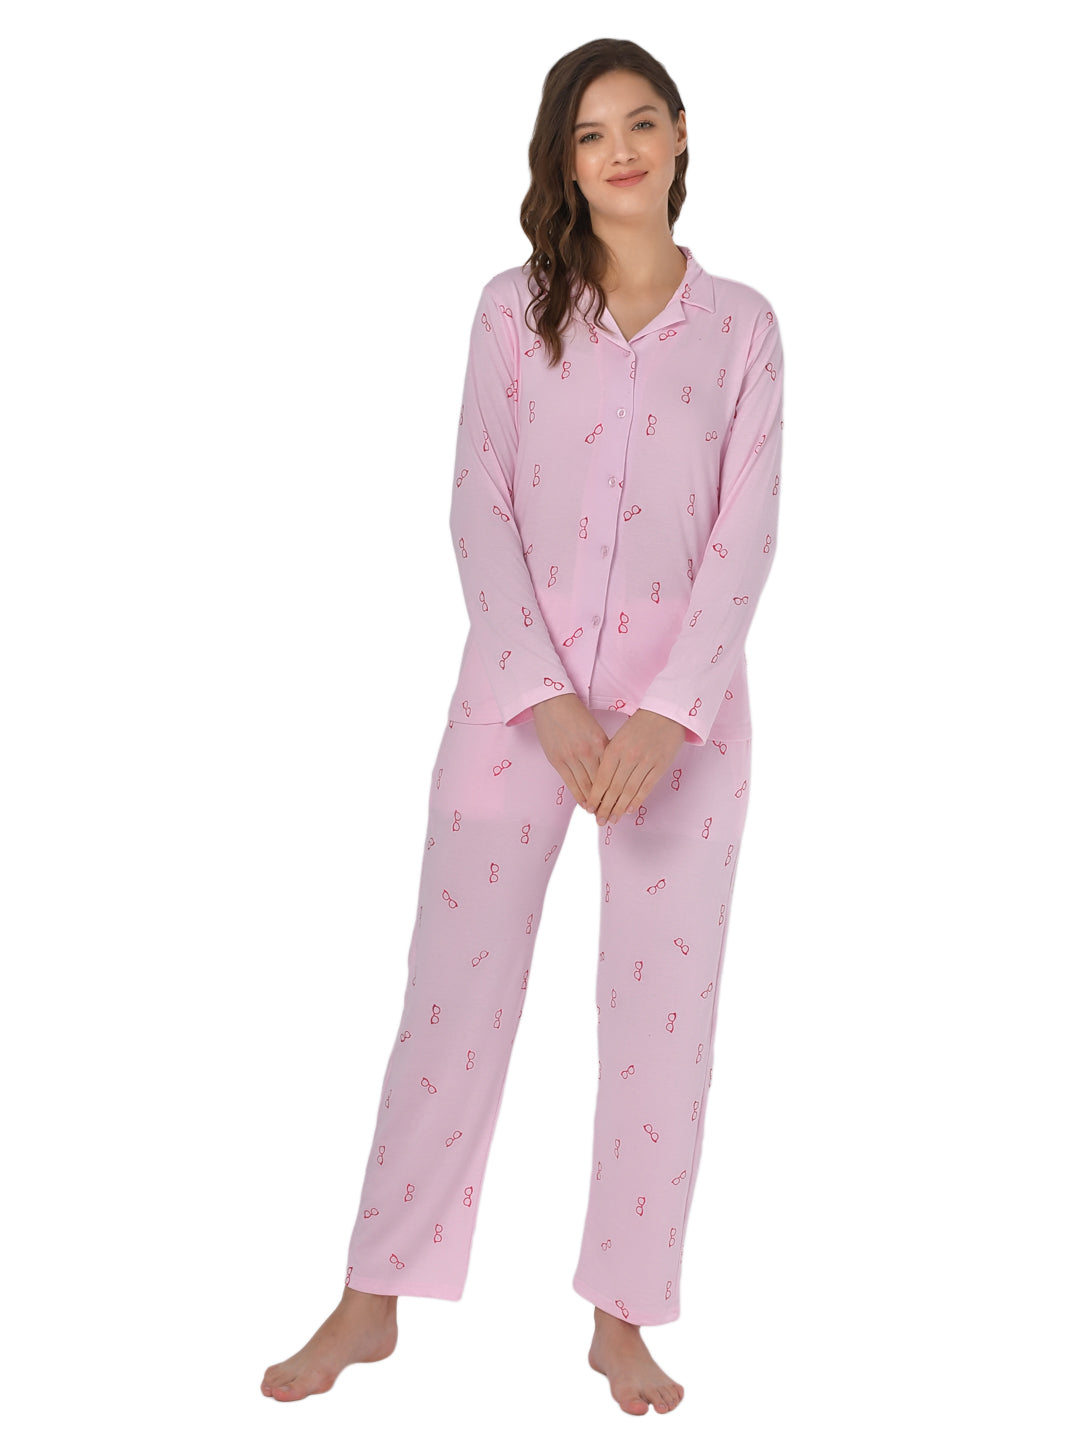 Klamotten Women's Baby Pink Allover Printed Top Pyjama Set N54Rb